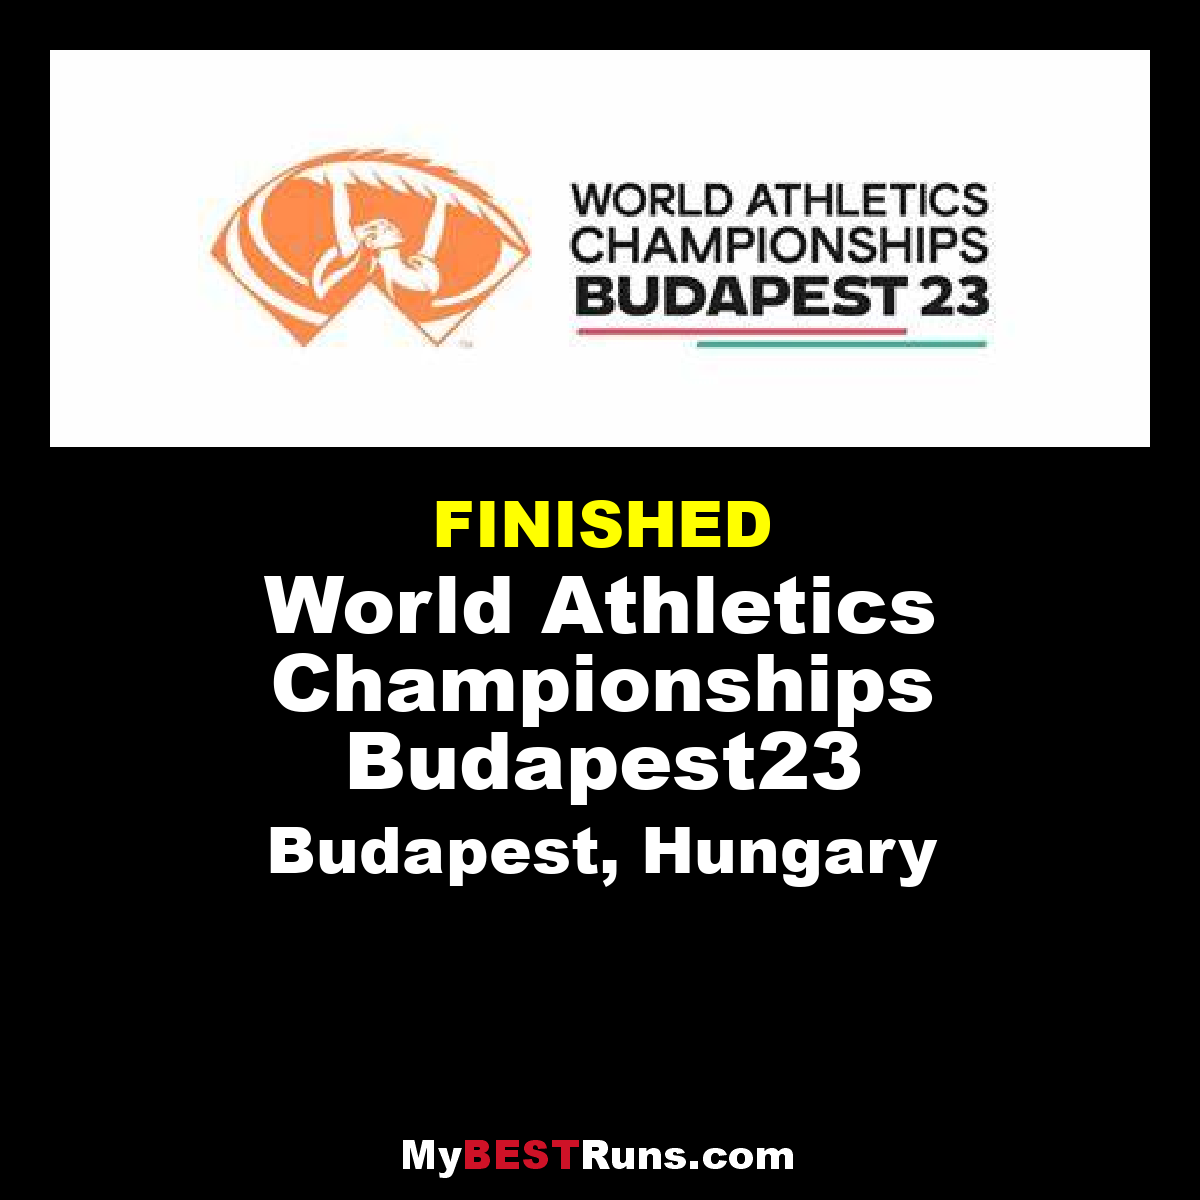 World Athletics Championships Budapest23